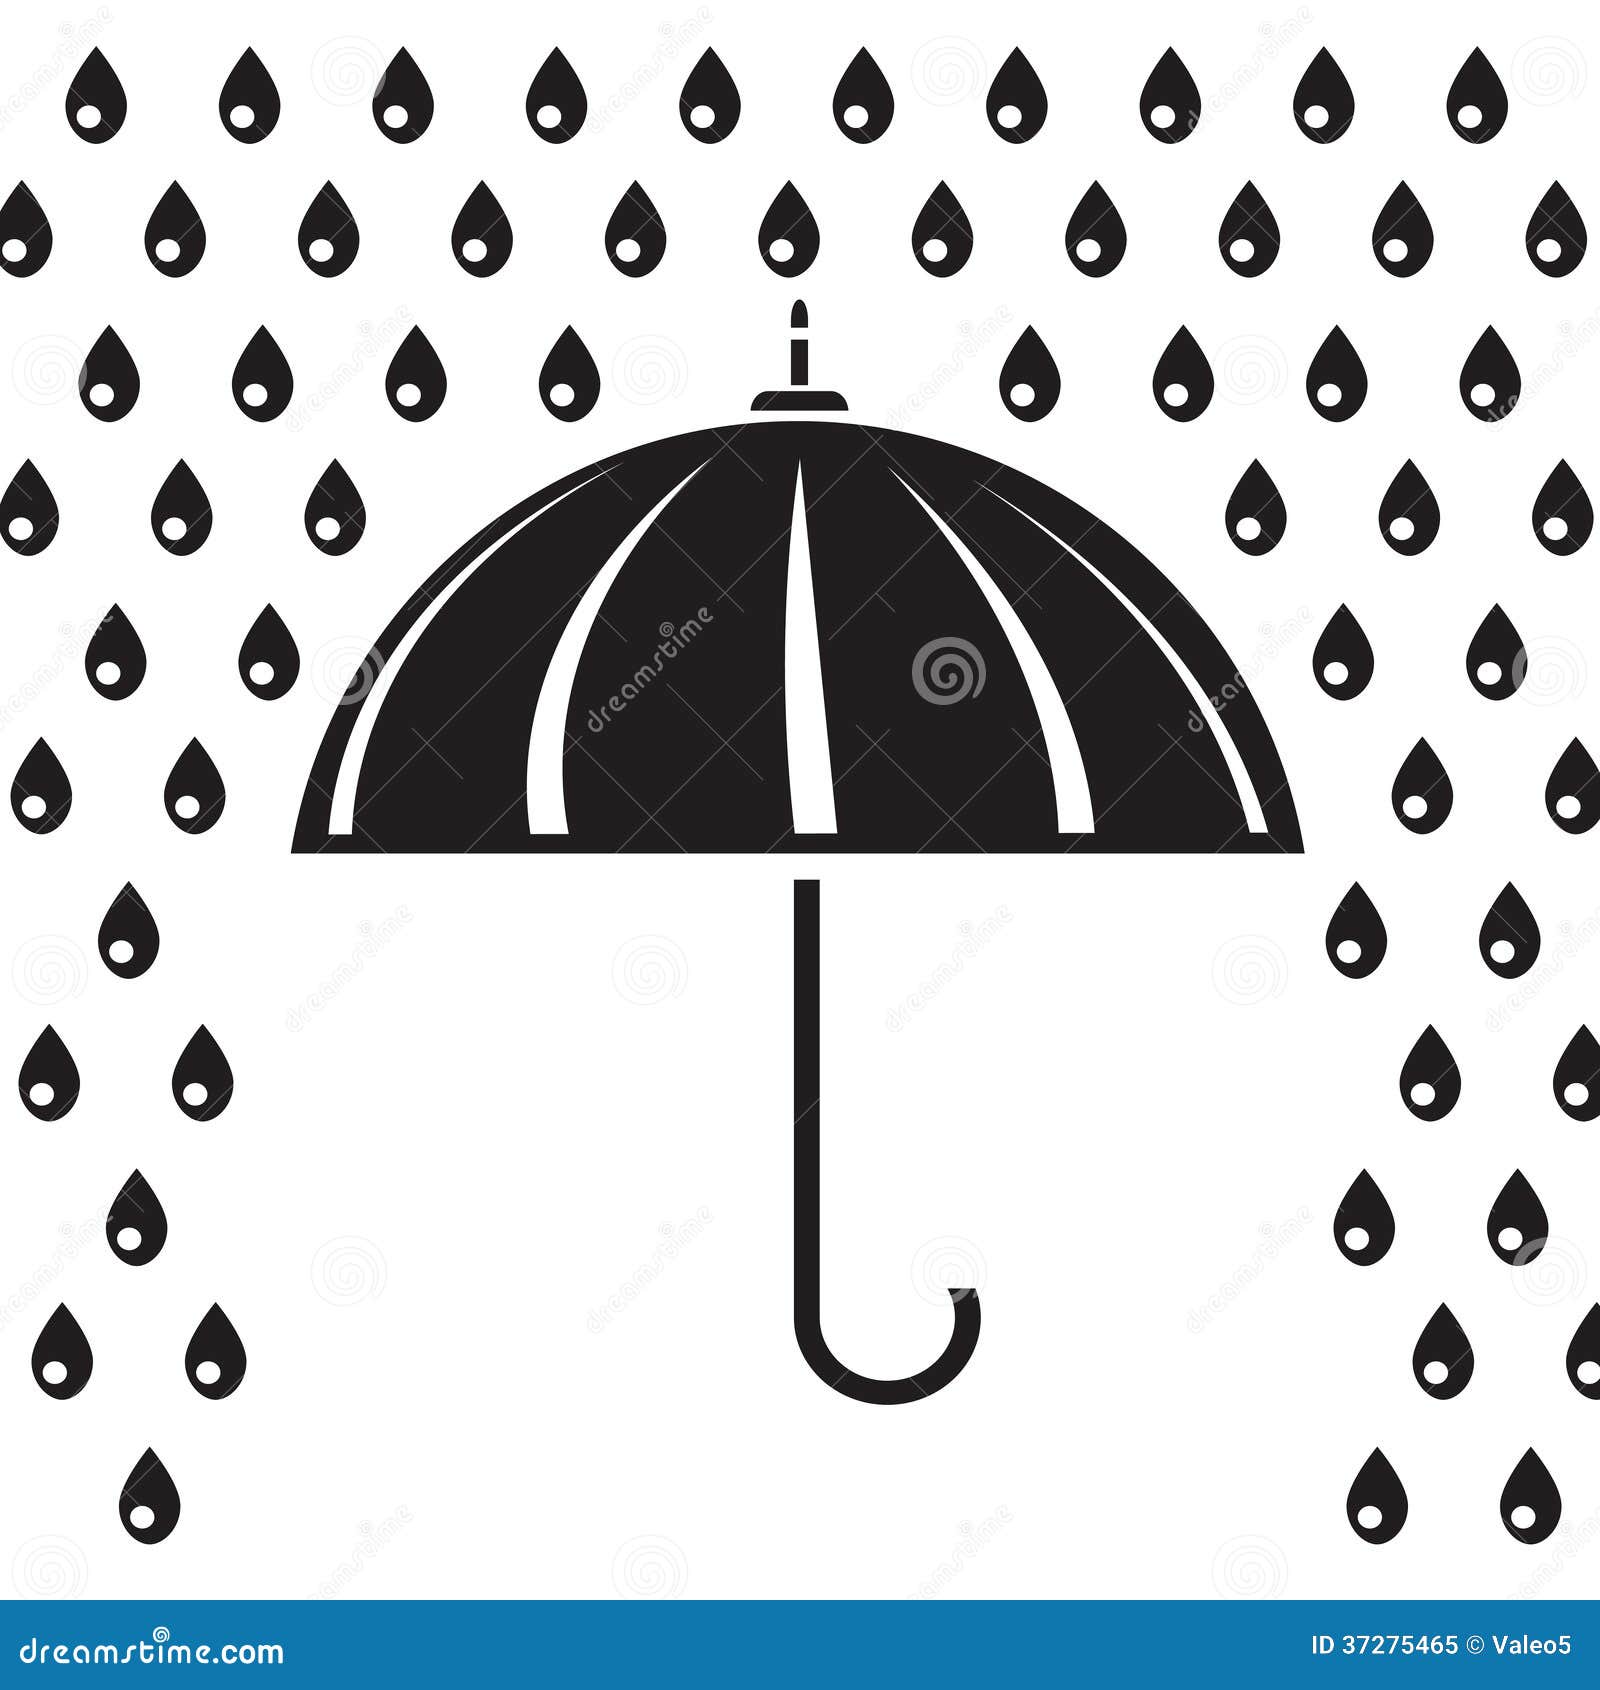 Silhouette of umbrella stock vector. Illustration of black - 37275465